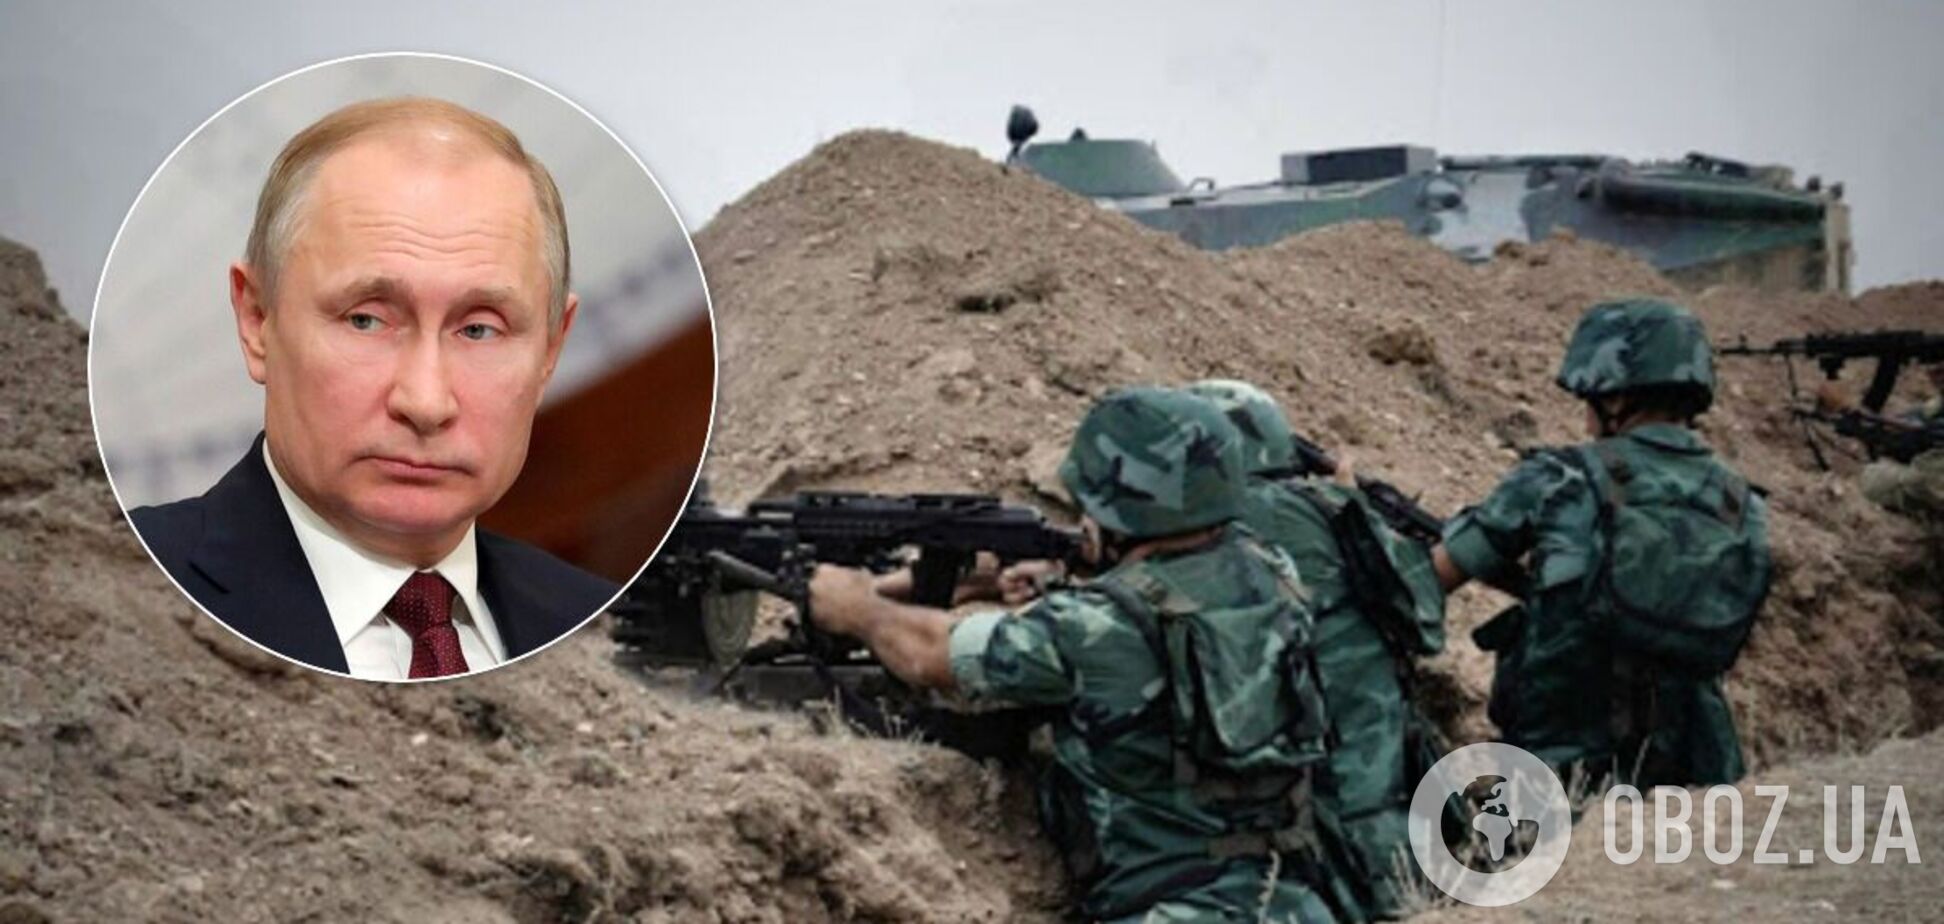 В Кремле ответили на конфликт в Карабахе, а Путин заговорил о невмешательстве